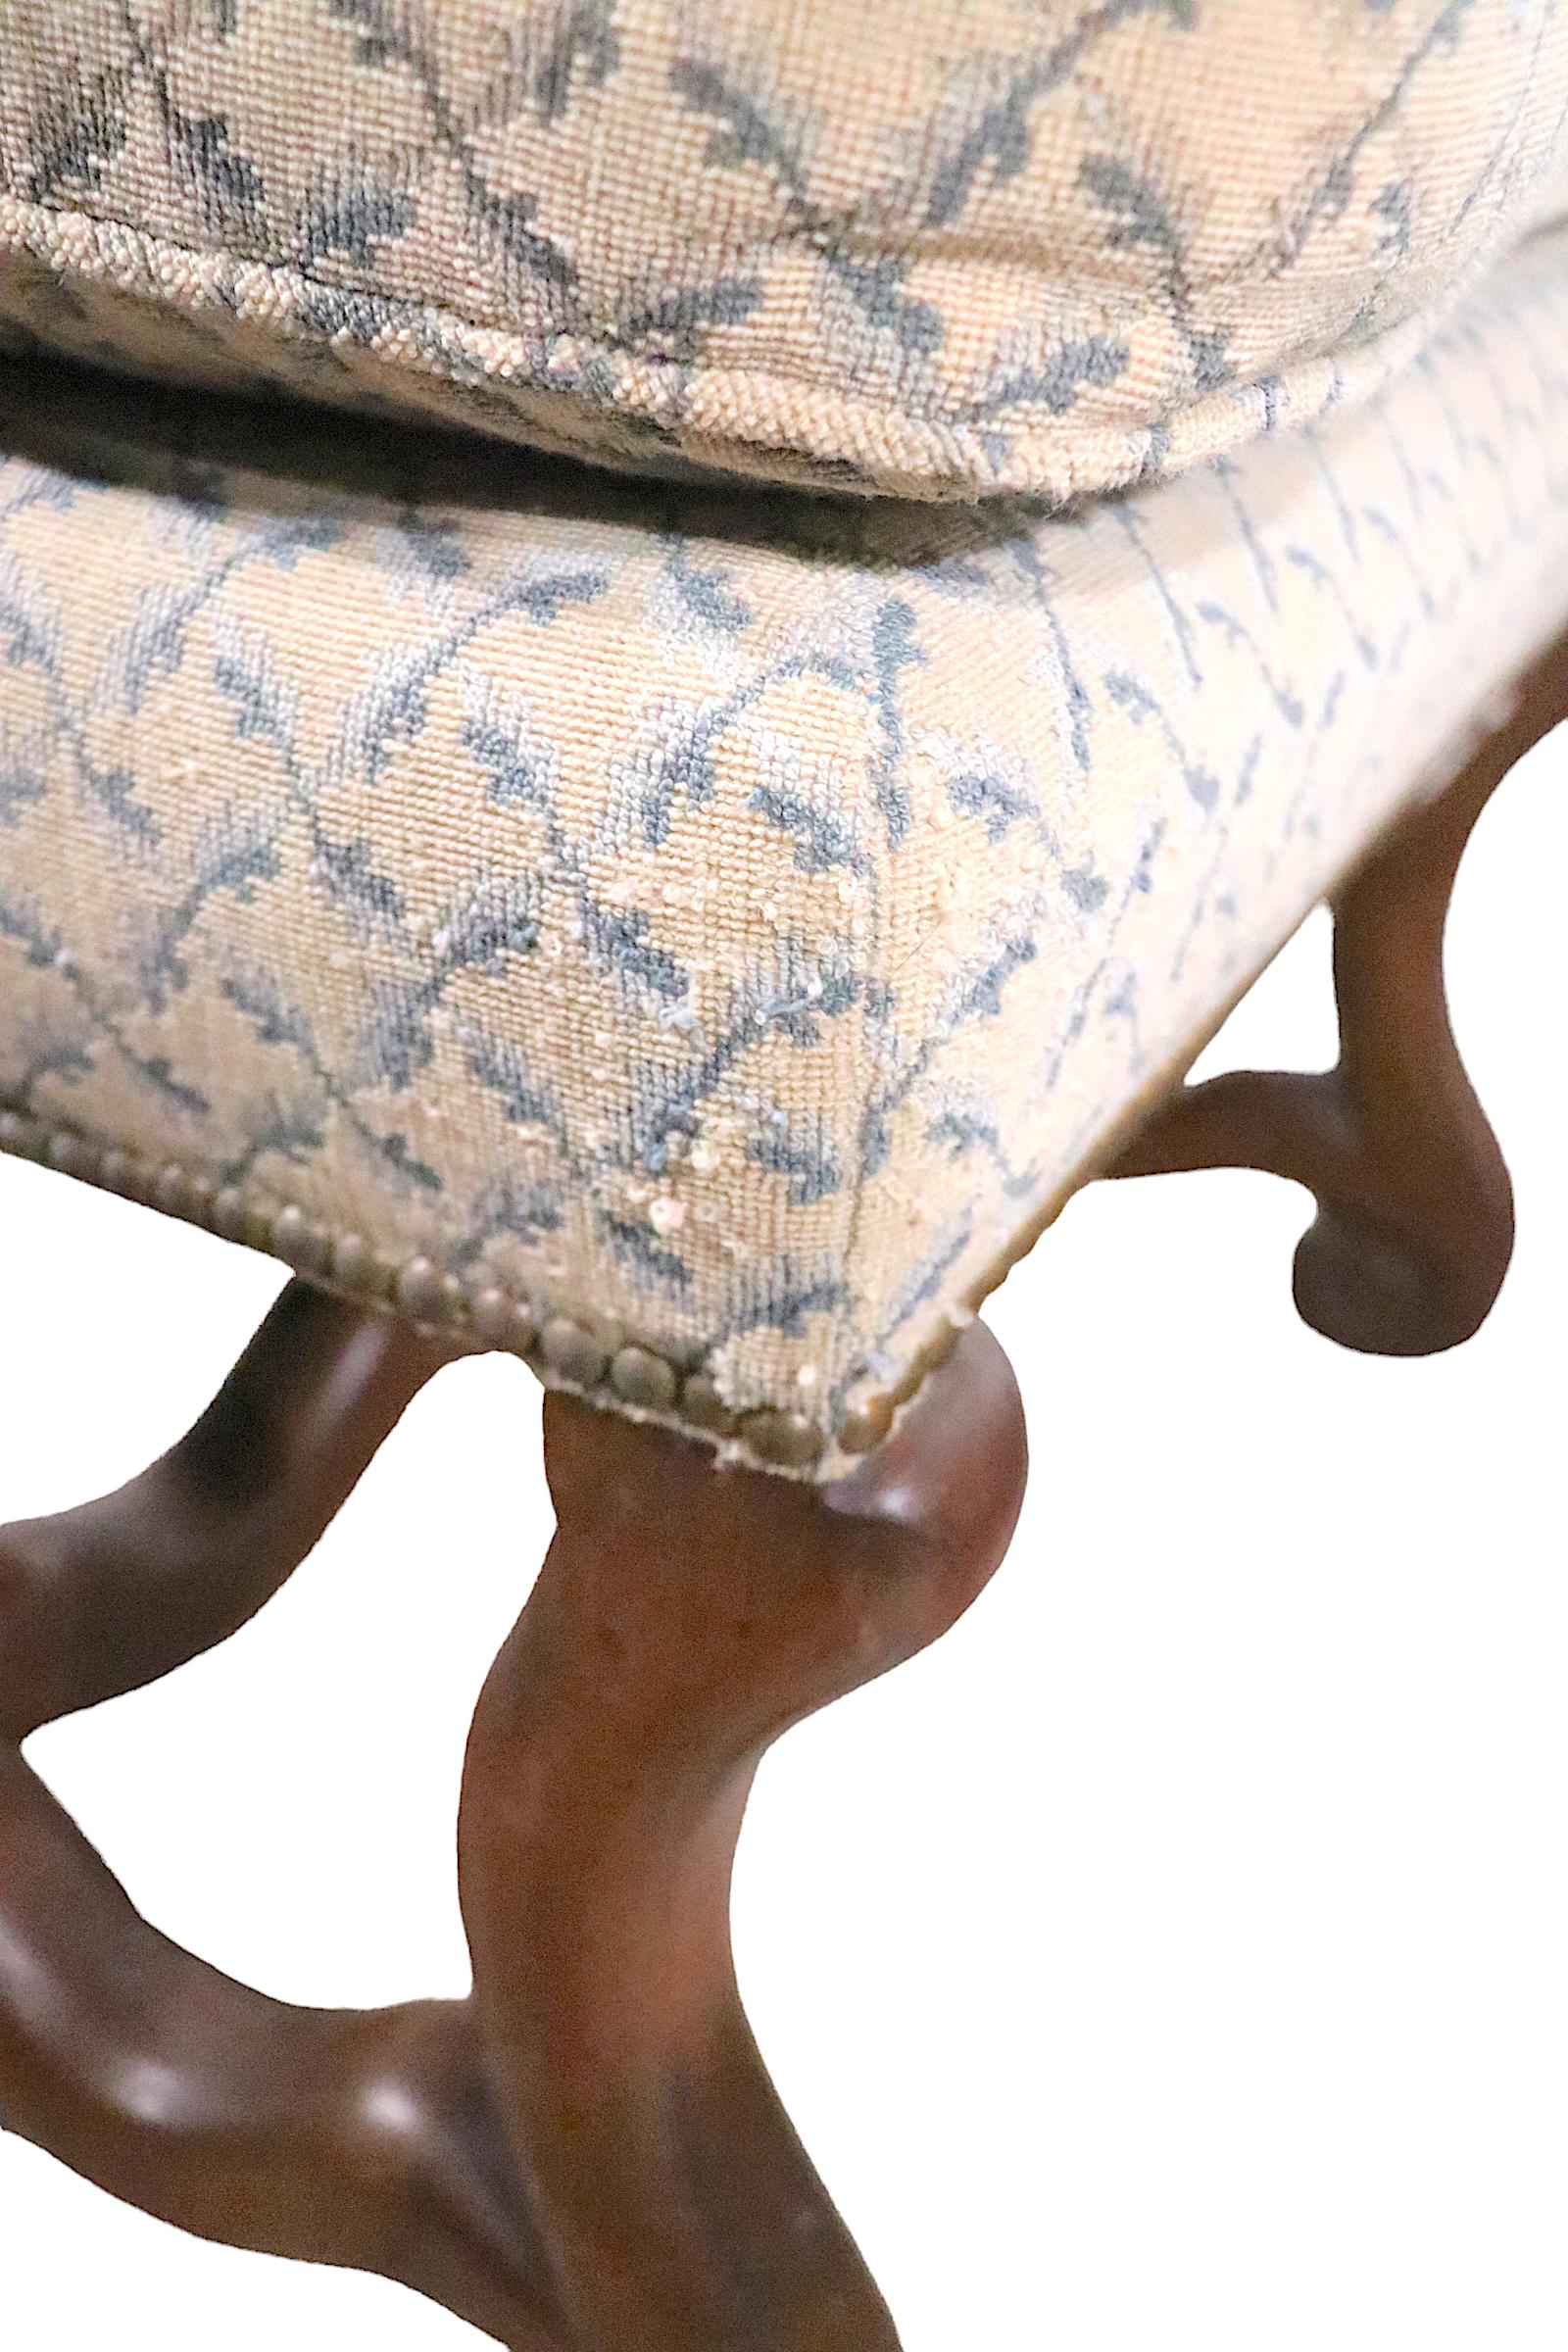 Upholstery Pr. Contemporary Os De Mouton Style Ottoman Pouf, Benches  For Sale